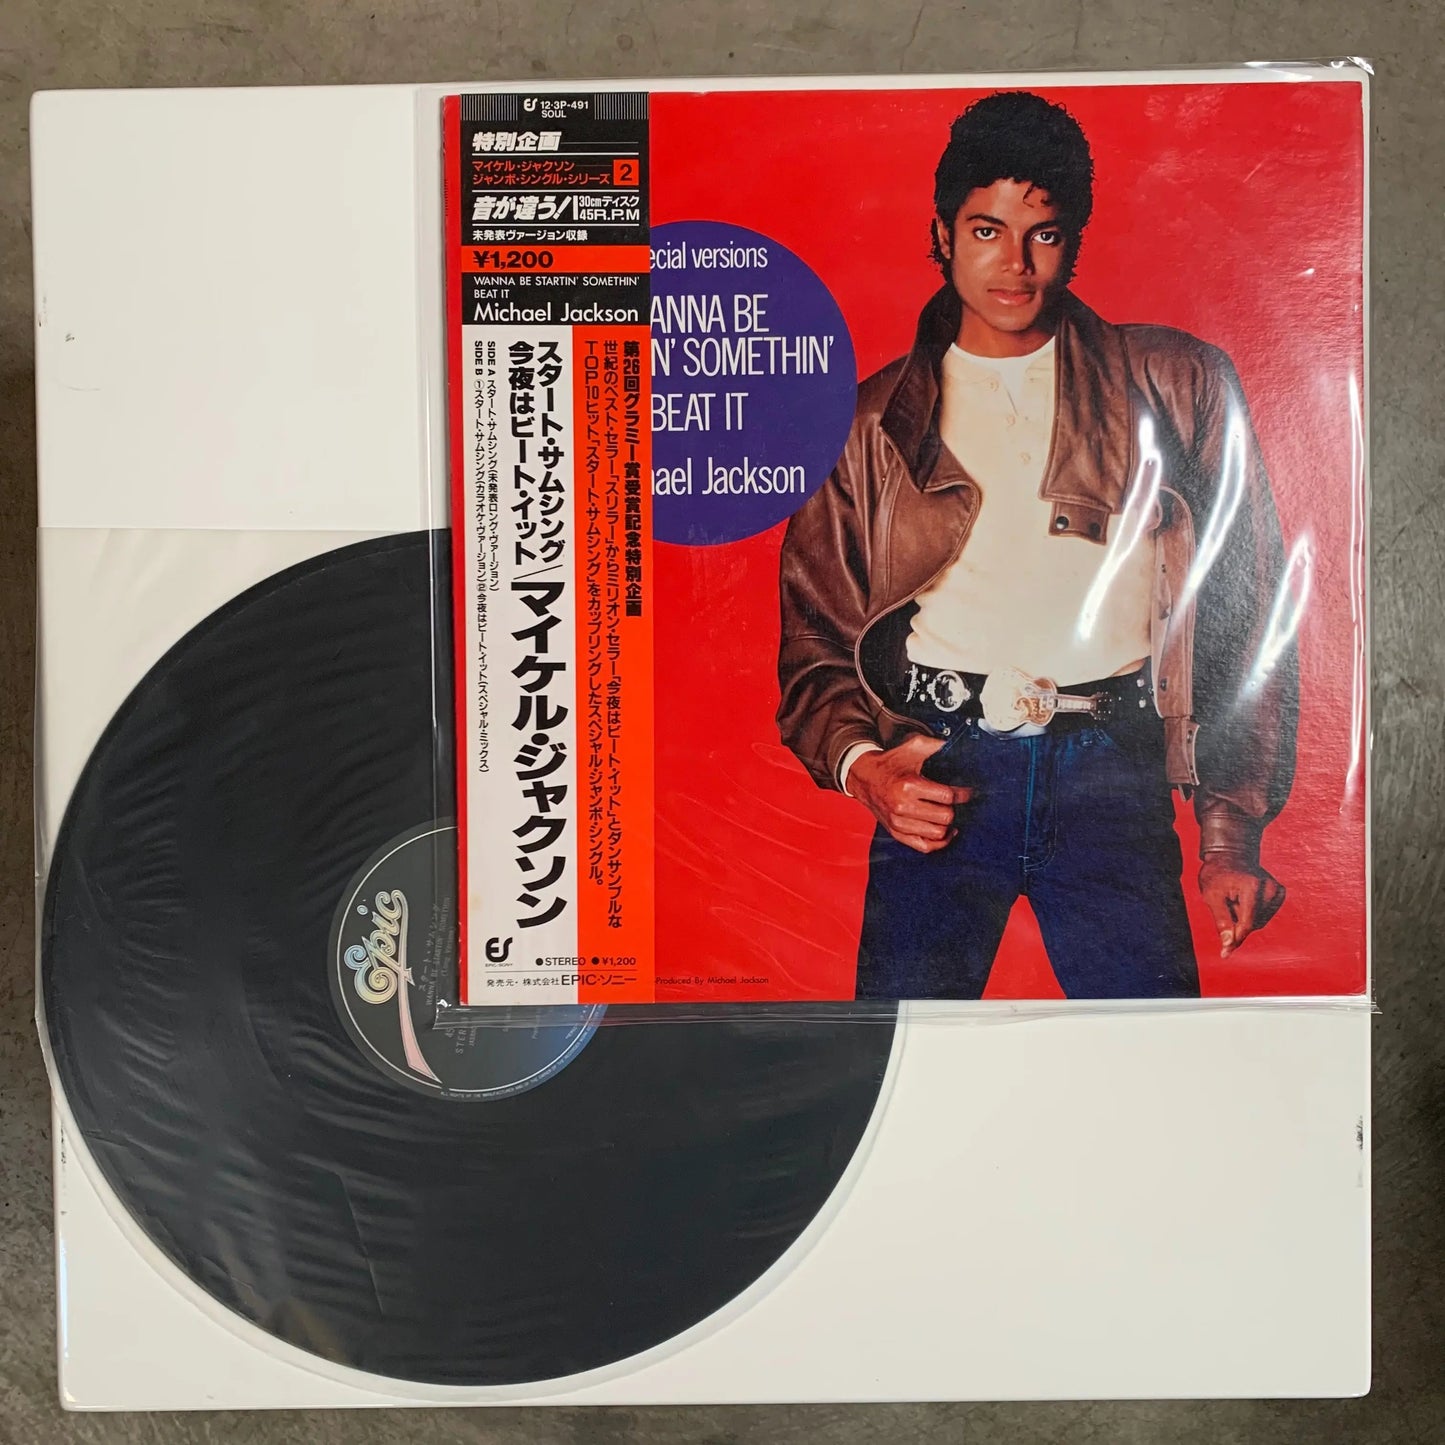 Michael Jackson - Wanna Be Startin’ Somethin’ [Original Japanese Pressing 12" Vinyl LP]